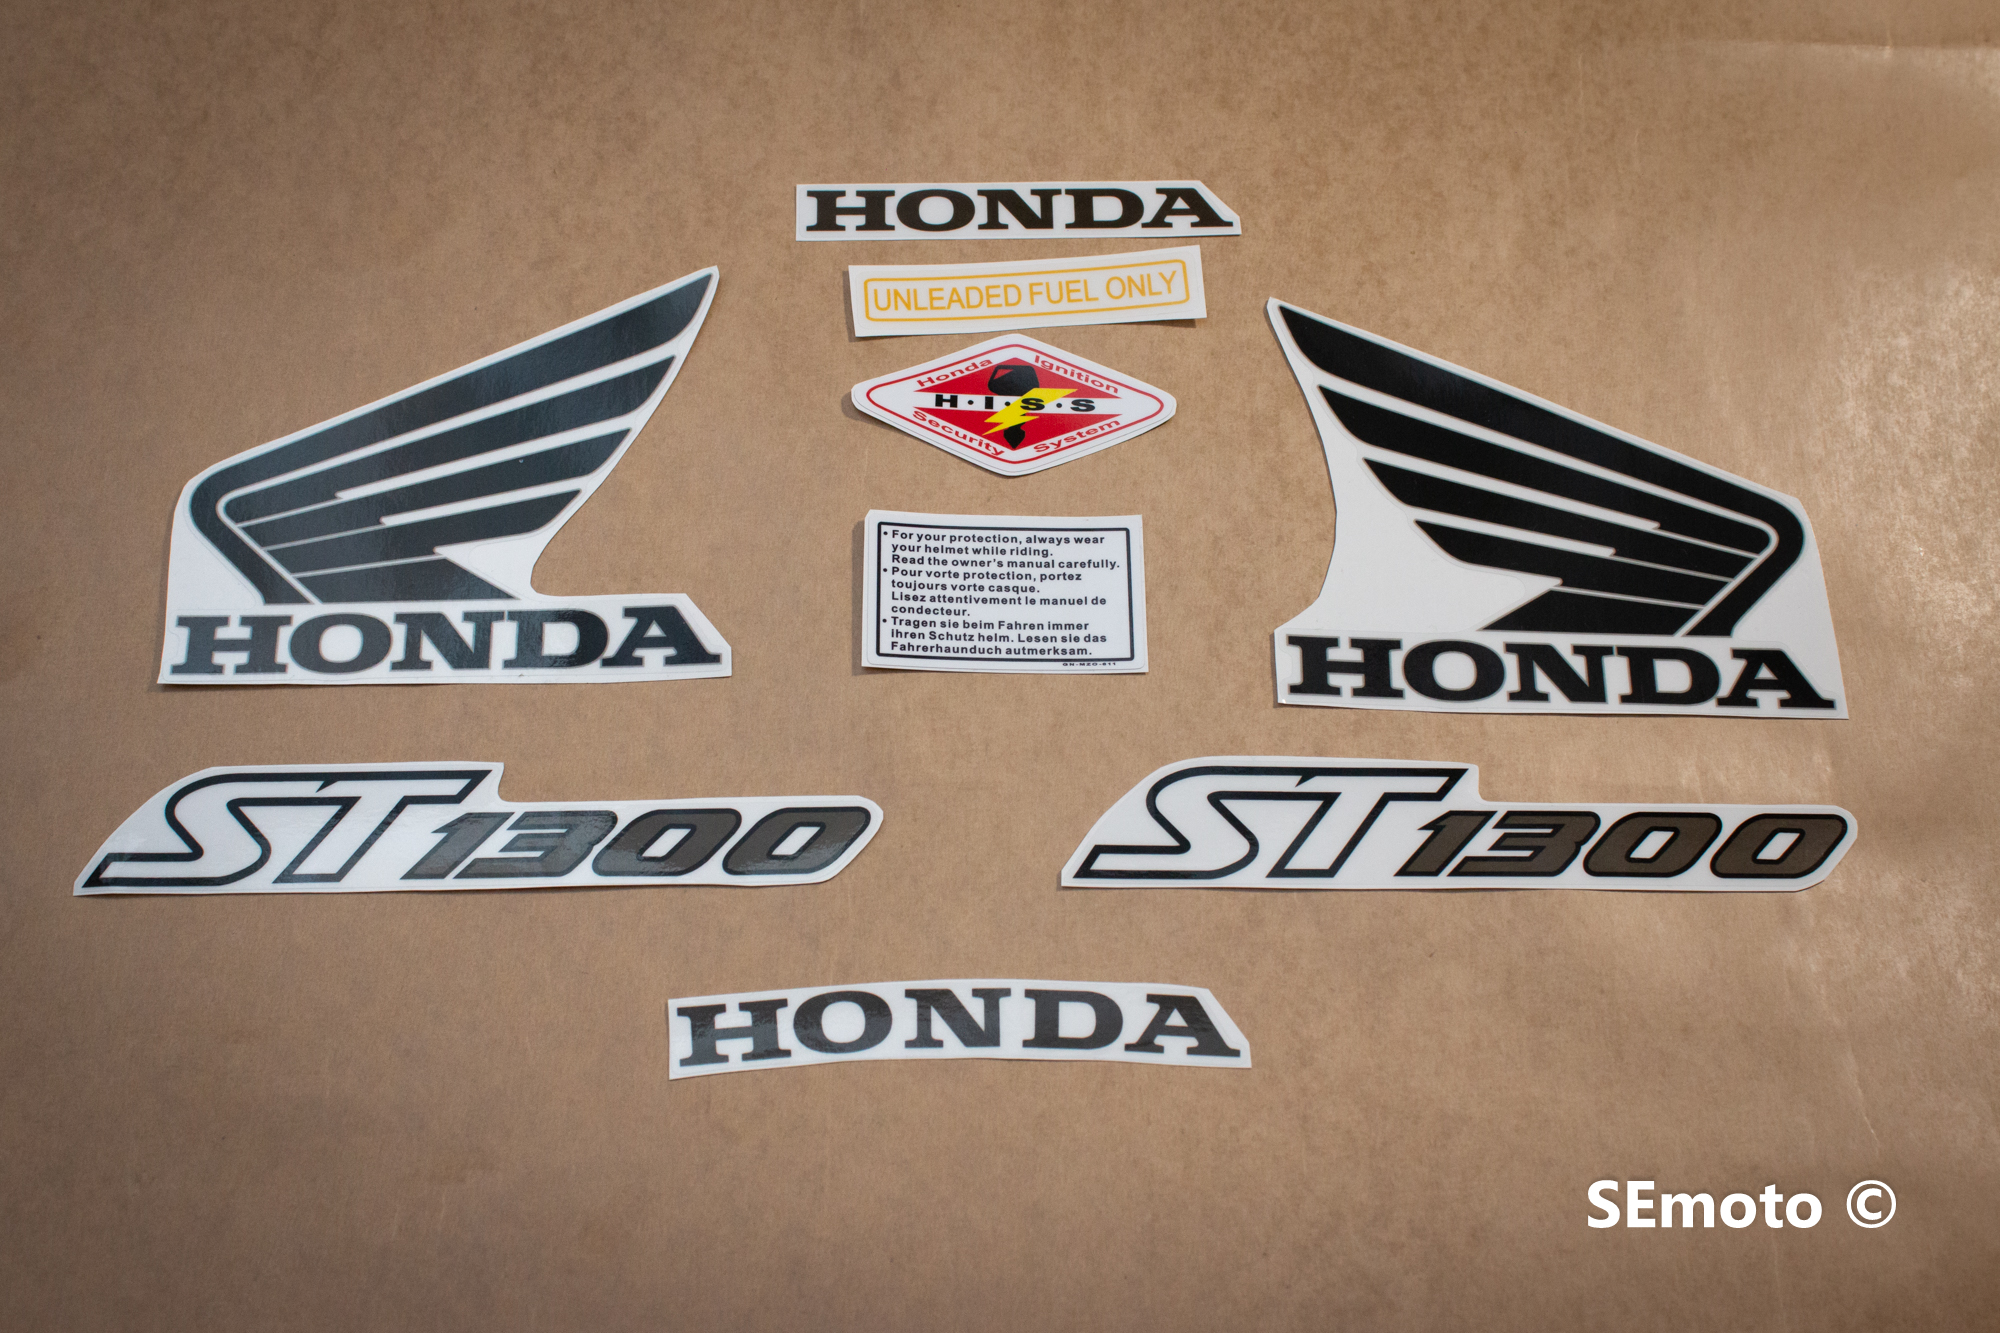 Honda ST 1300 Серебро- фото2